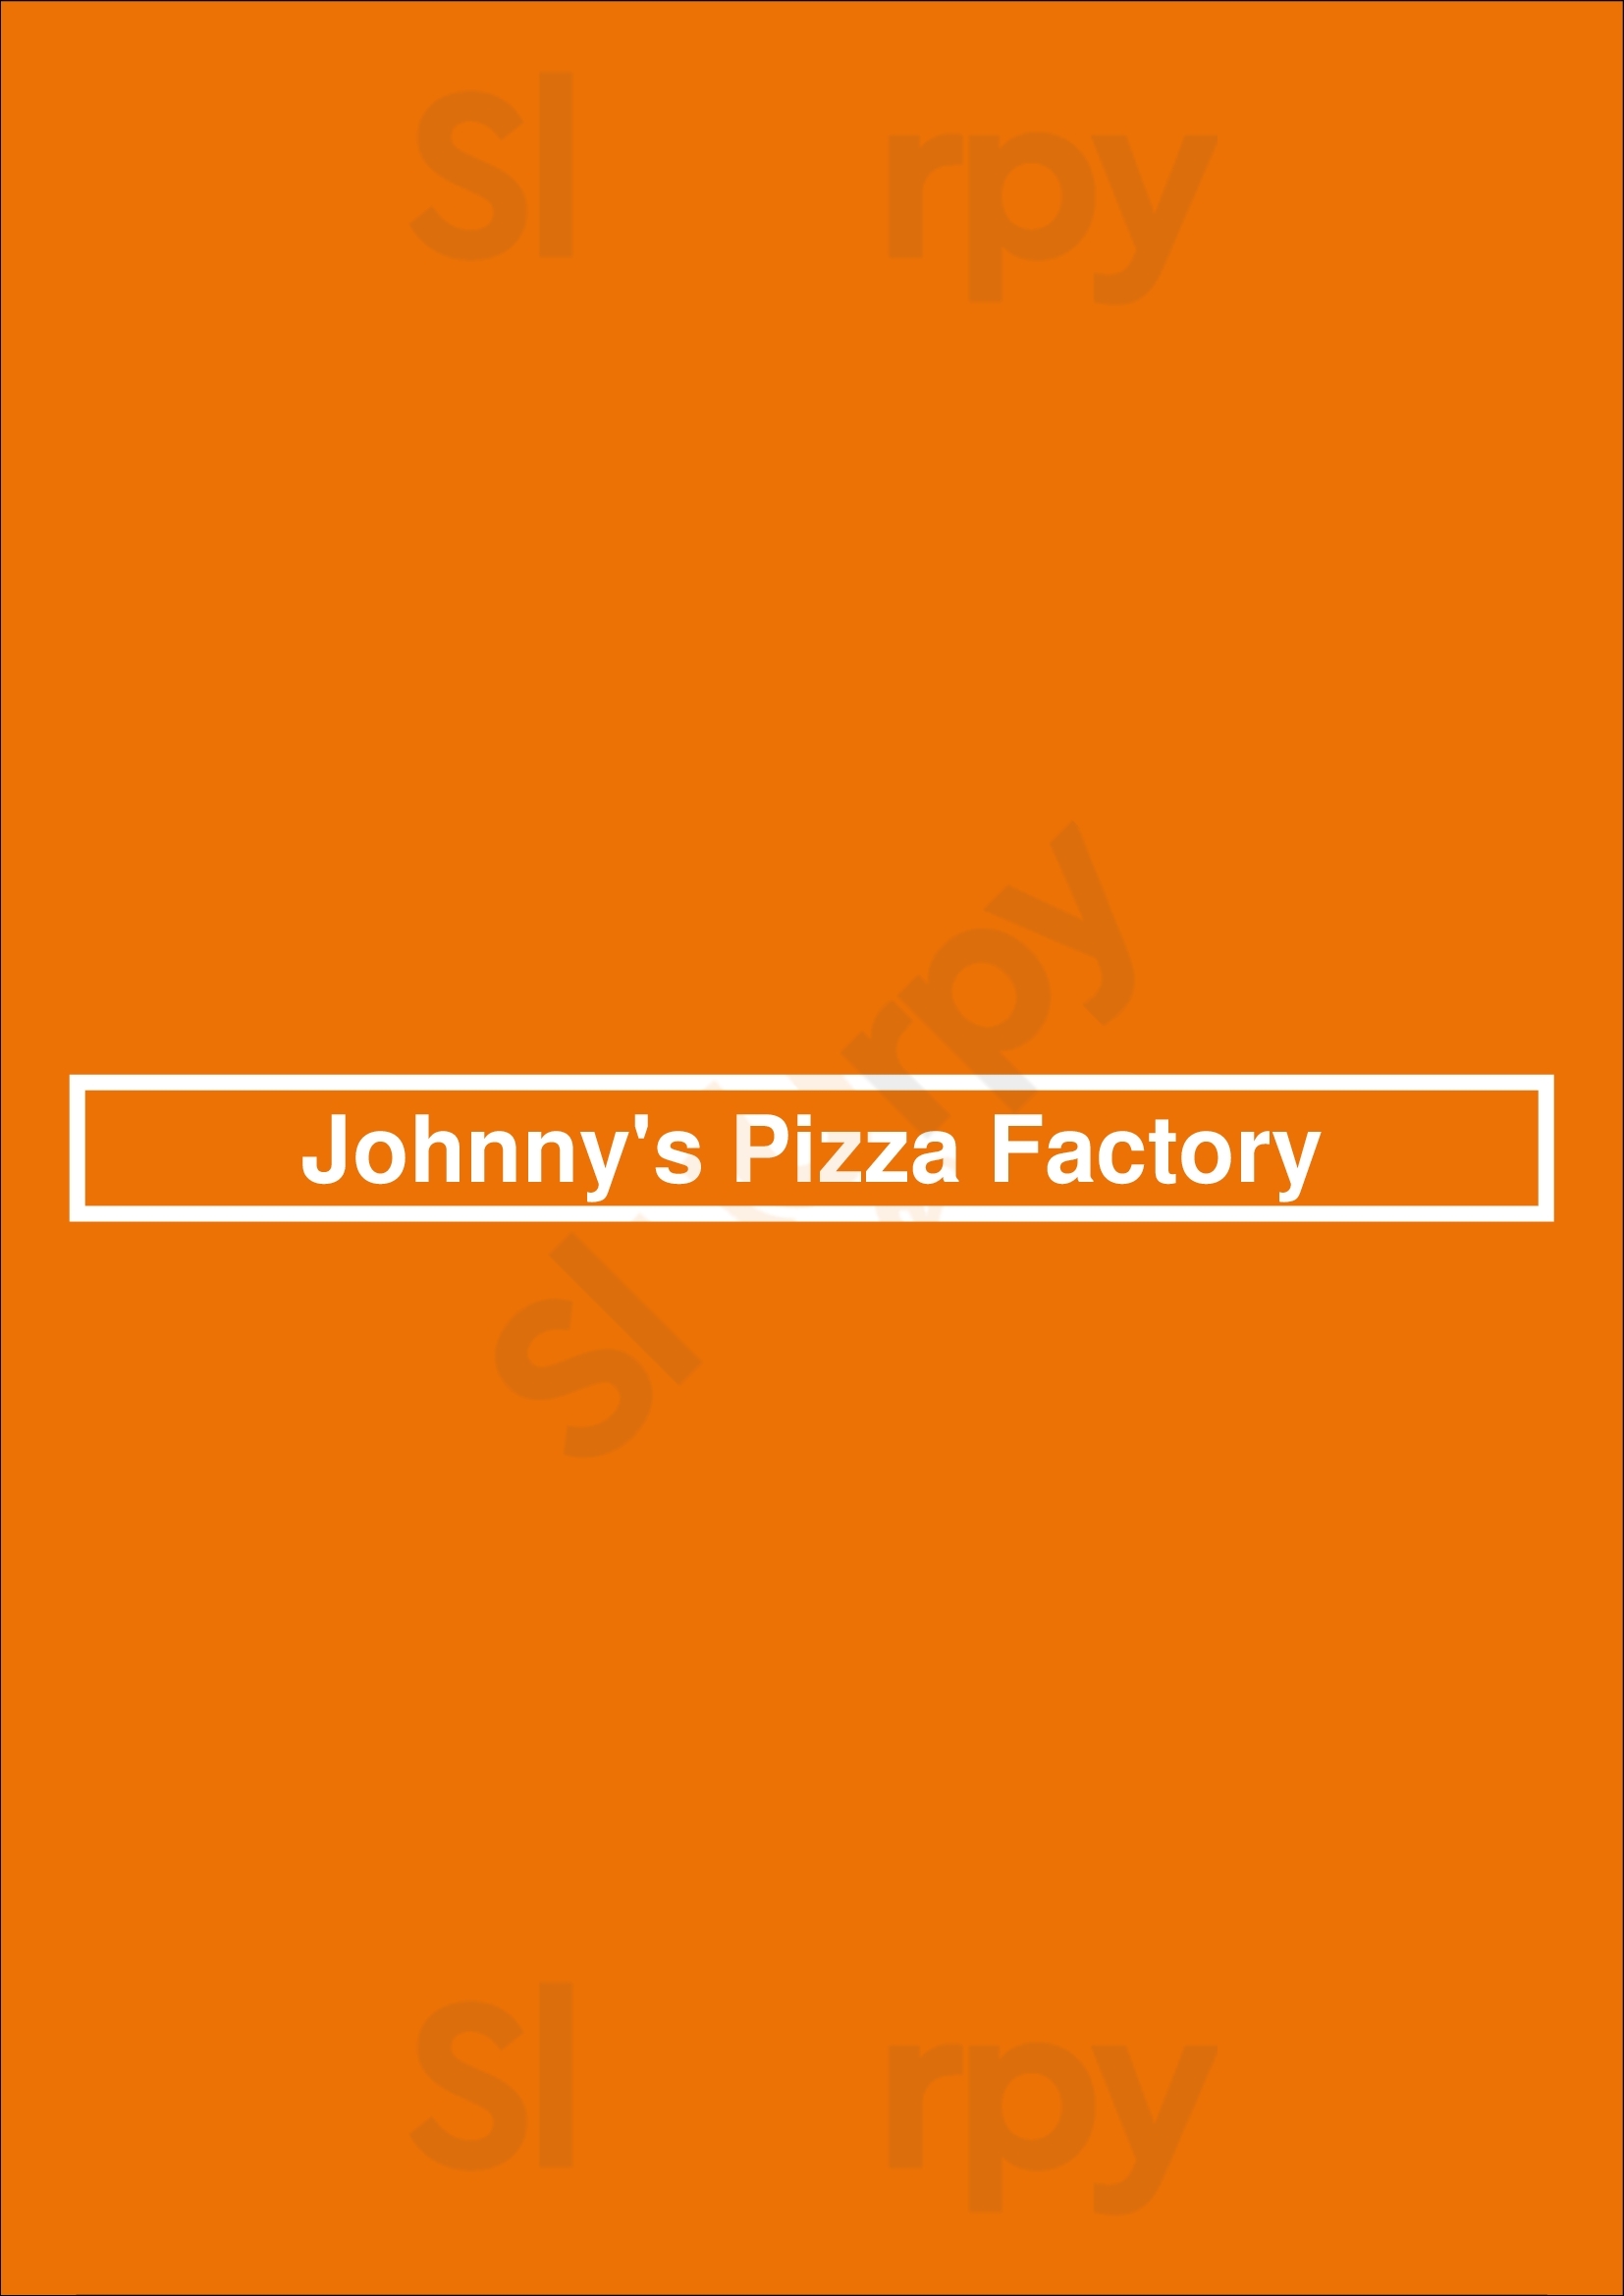 Johnny's Pizza Factory Vancouver Menu - 1